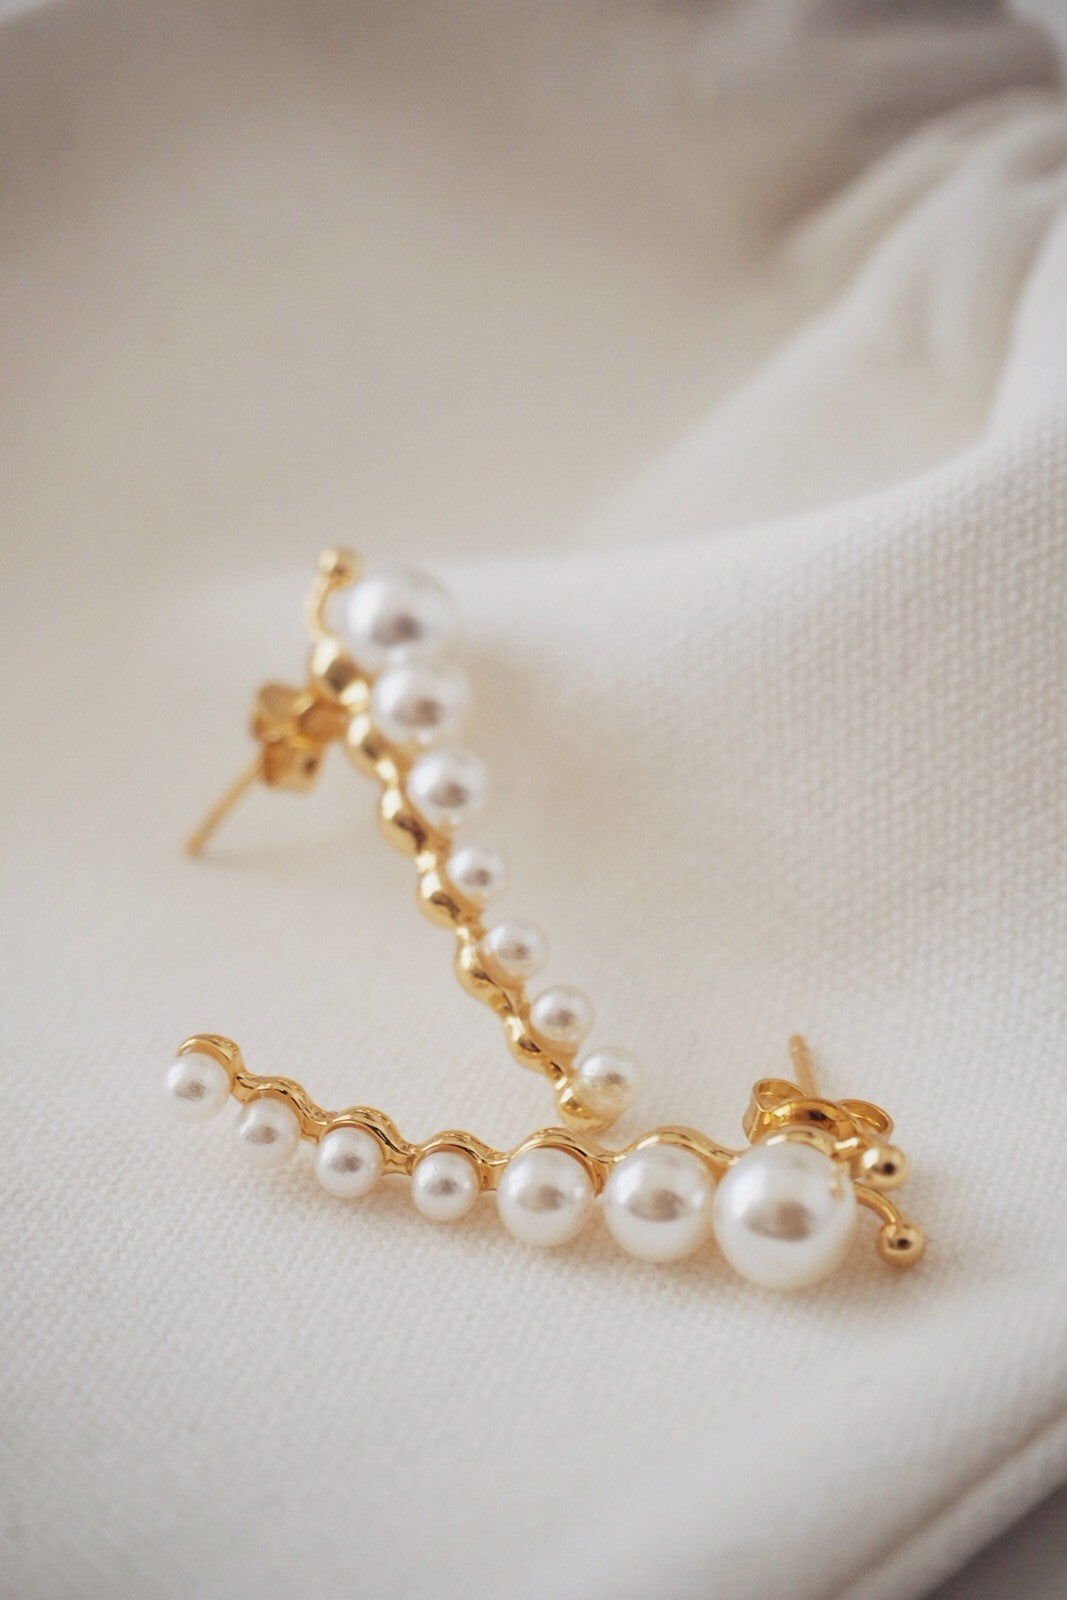 SKYE San Francisco SF ethical sustainable modern minimalist women fashion accessories Zelia 18K Gold Pearl Caterpillar Earrings